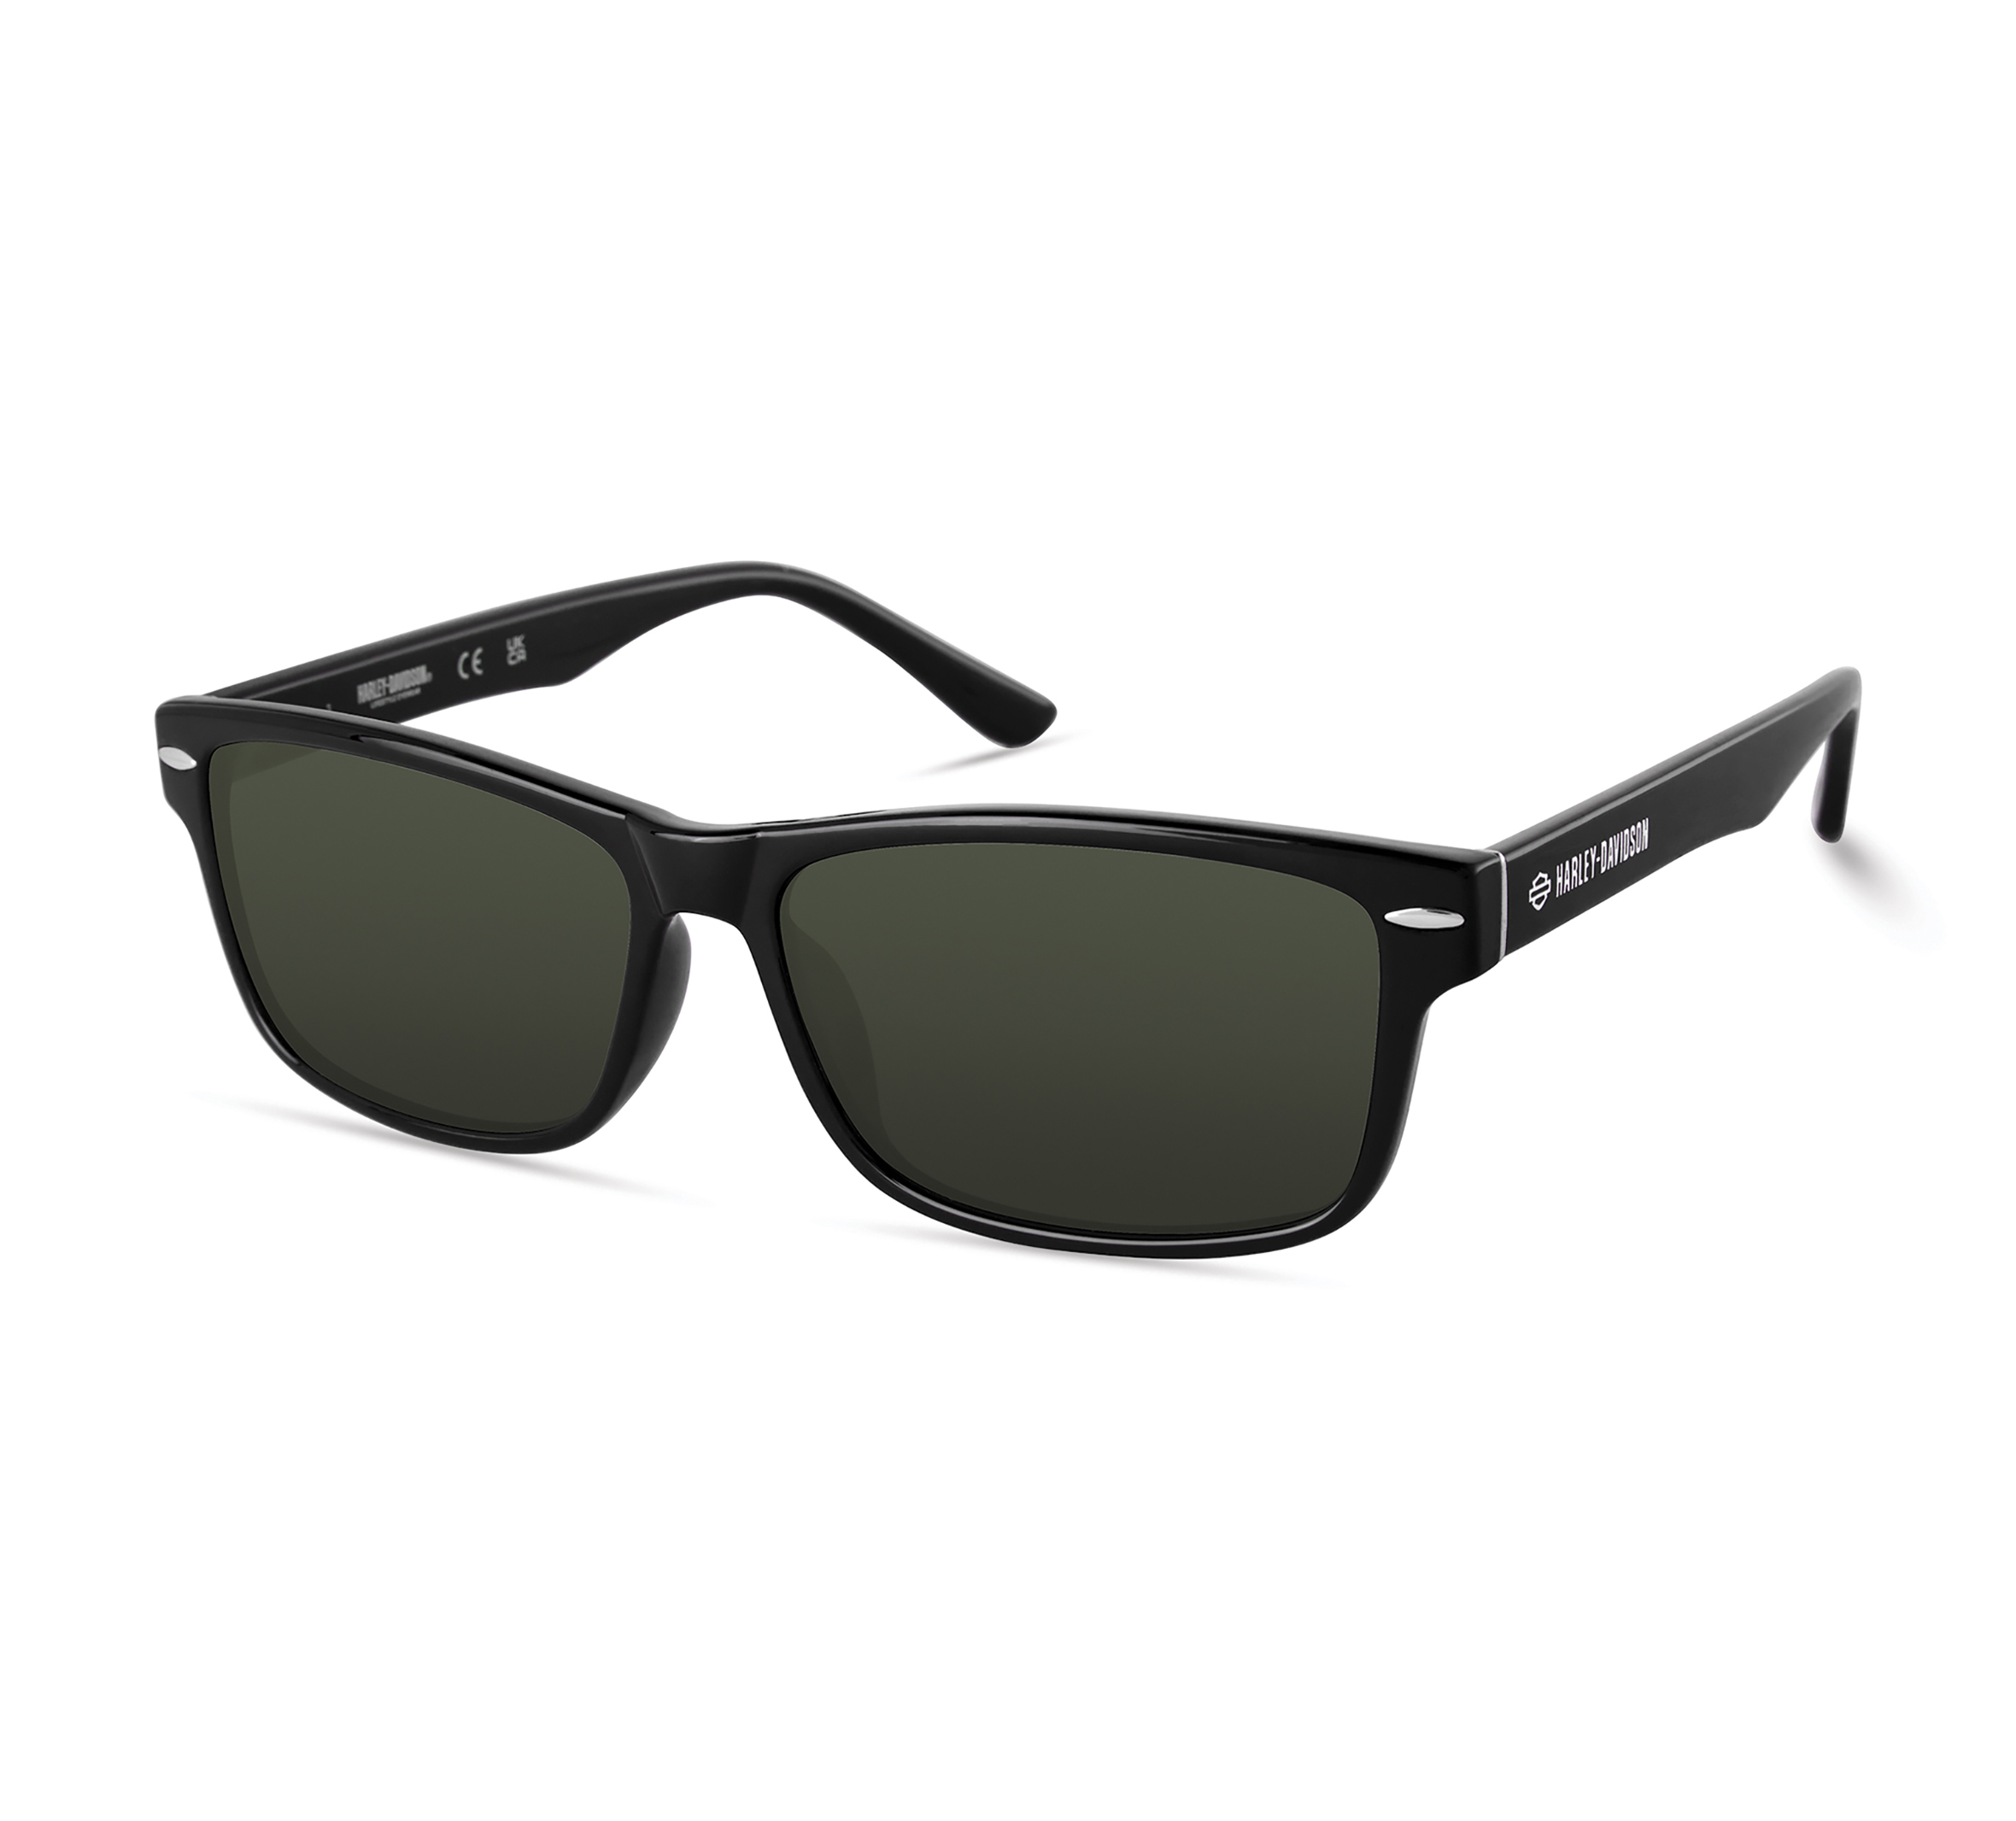 Casual Rectangular Sunglasses - Green Lens | Harley-Davidson USA